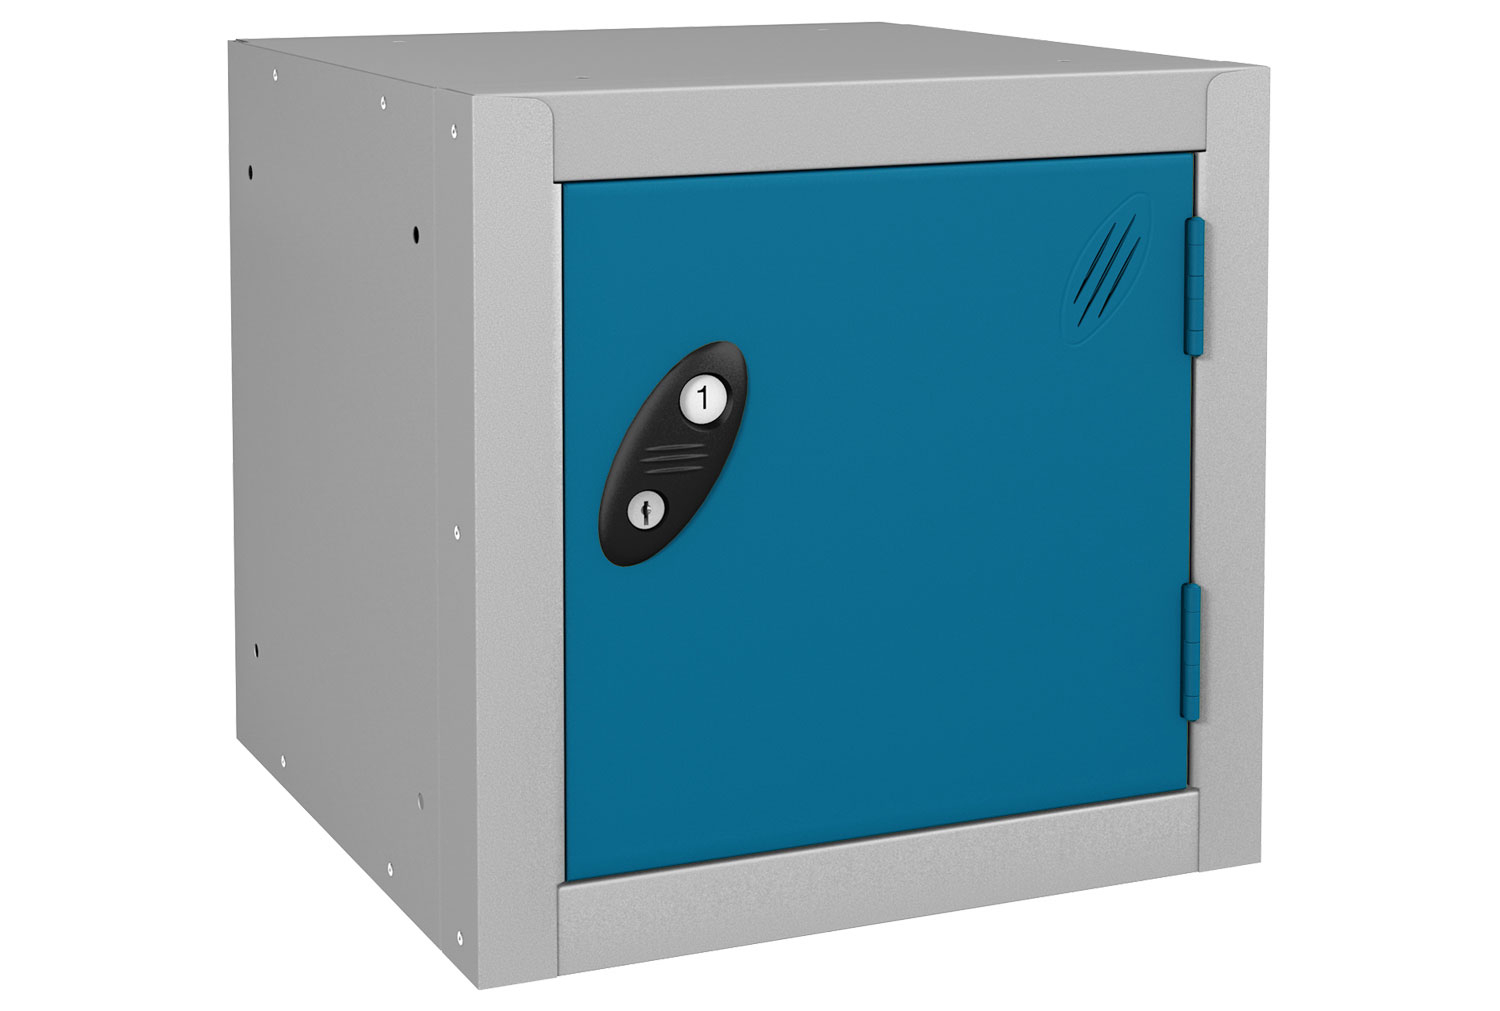 Probe Cube Lockers, 38wx38dx38h (cm), Combination Lock, Silver Body, Blue Doors